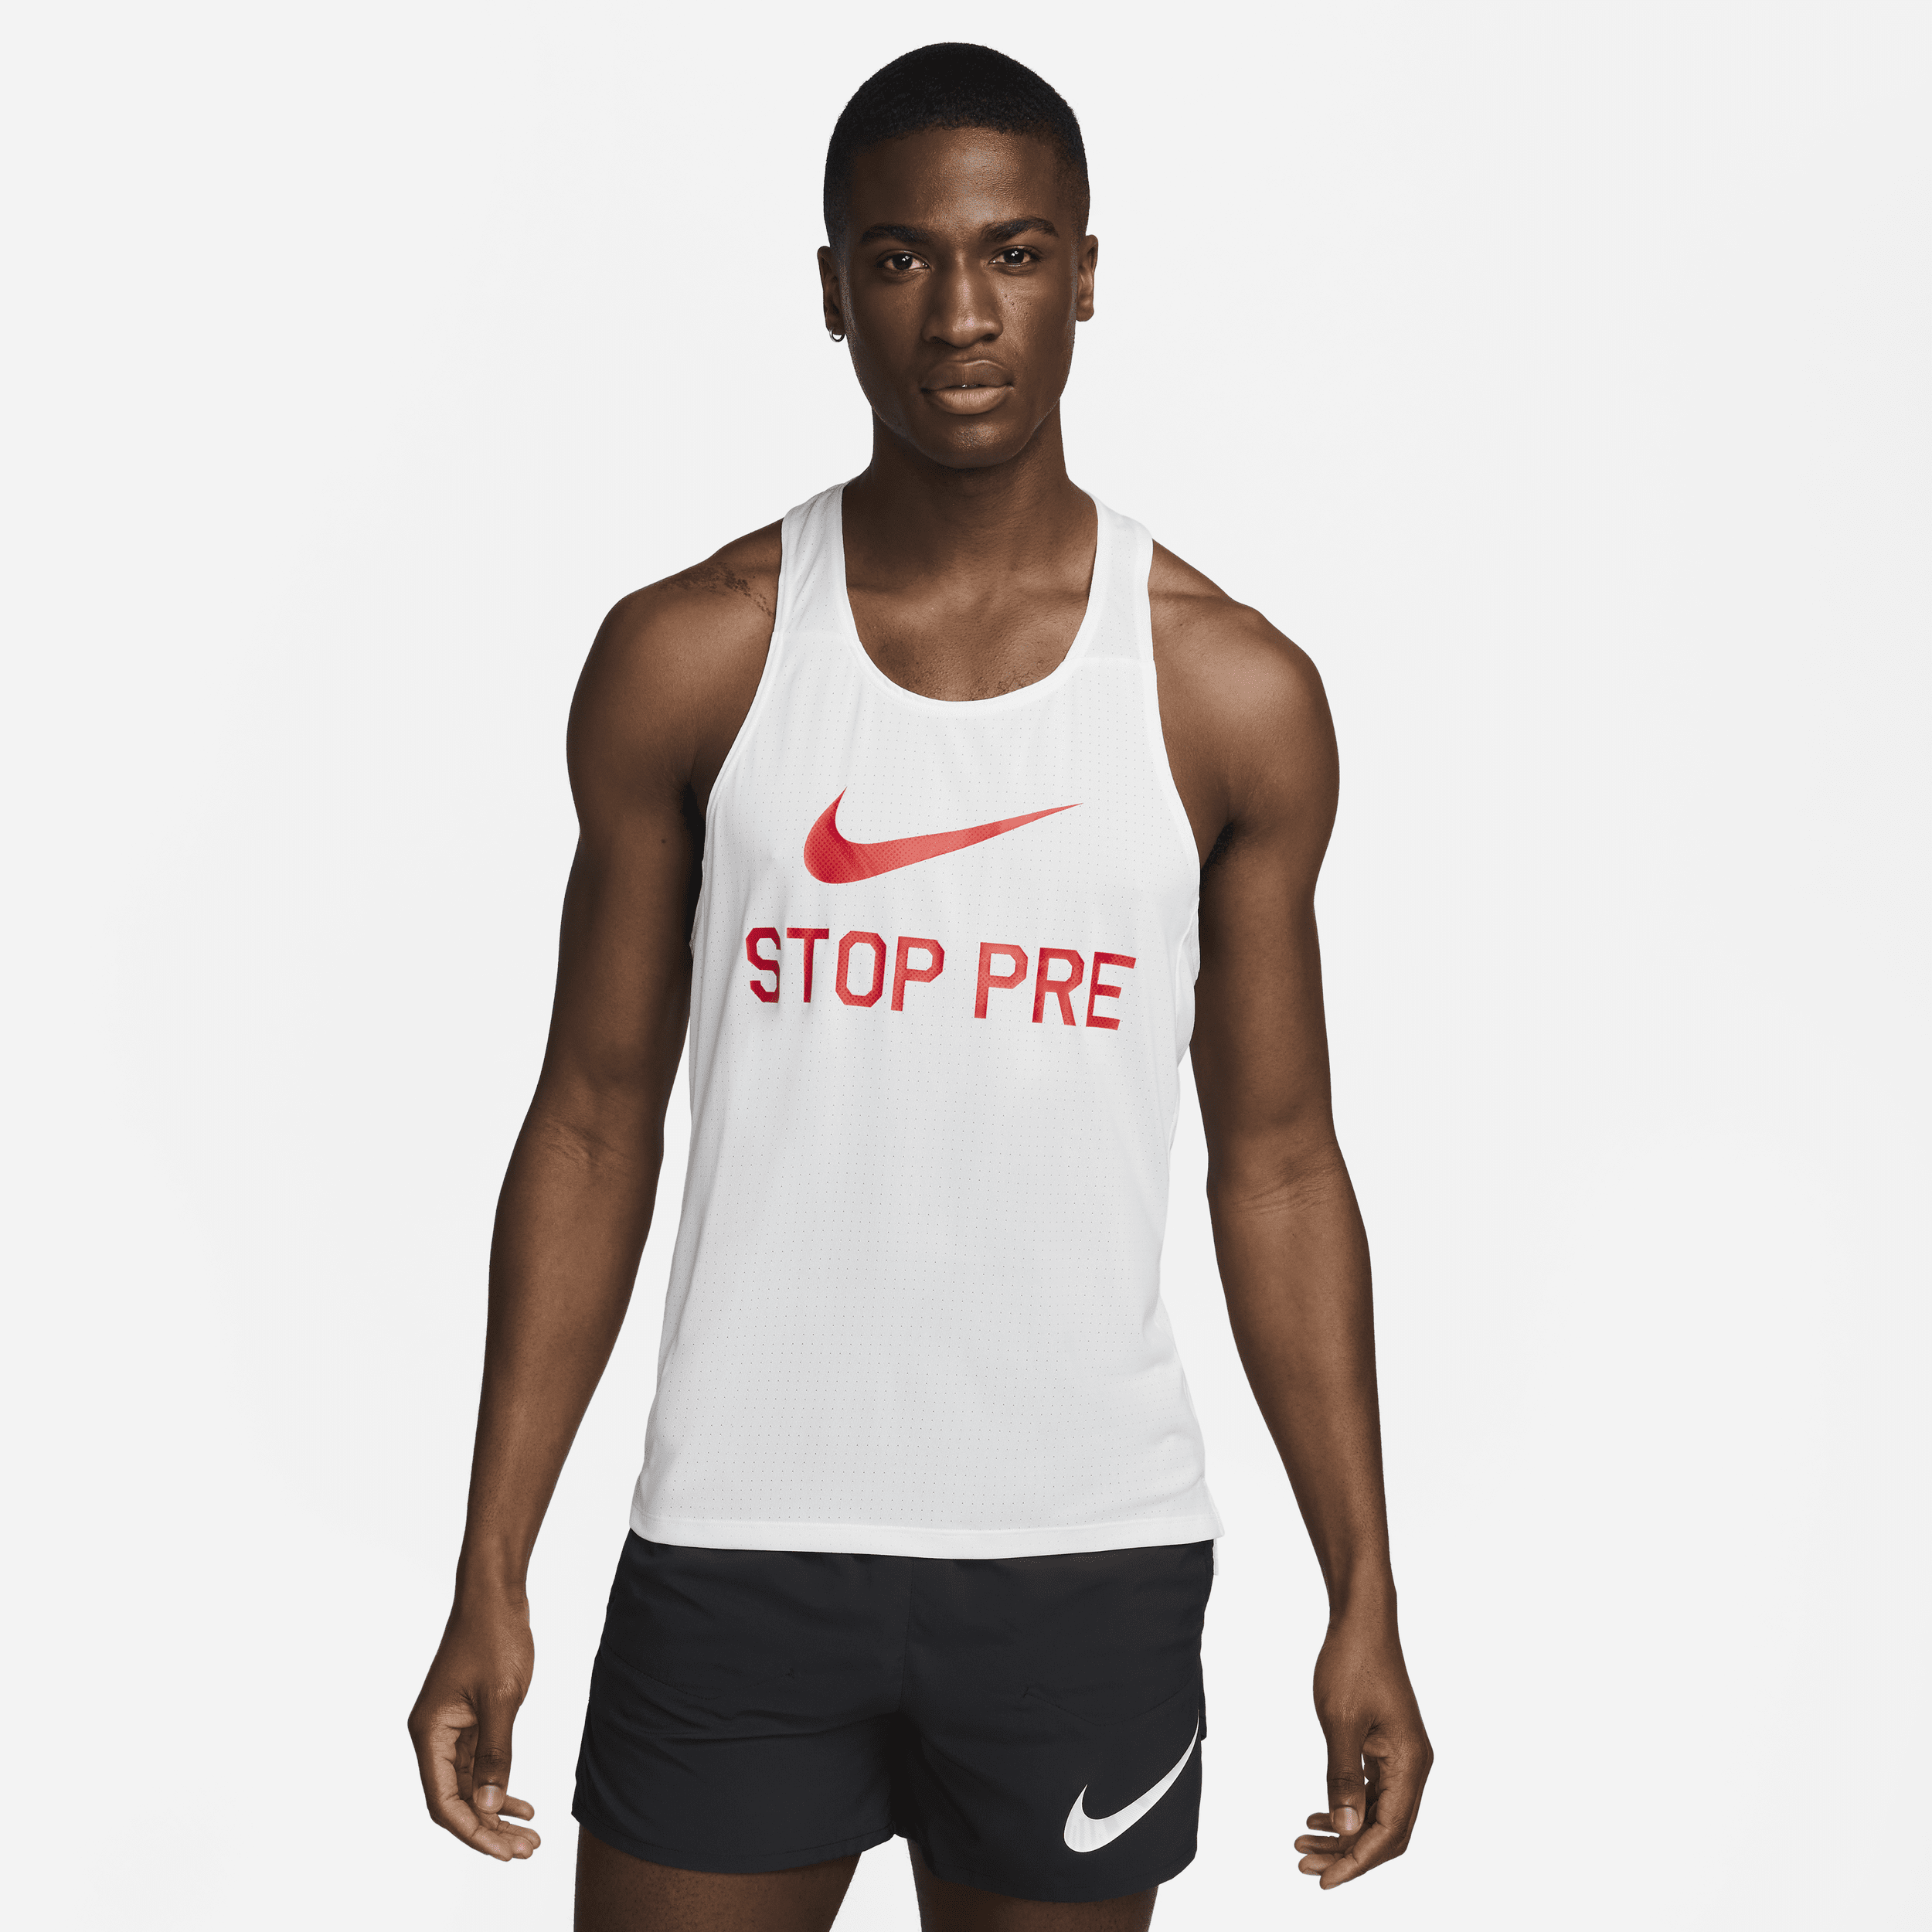 Nike Fast Run Energy hardloopsinglet voor heren - Wit